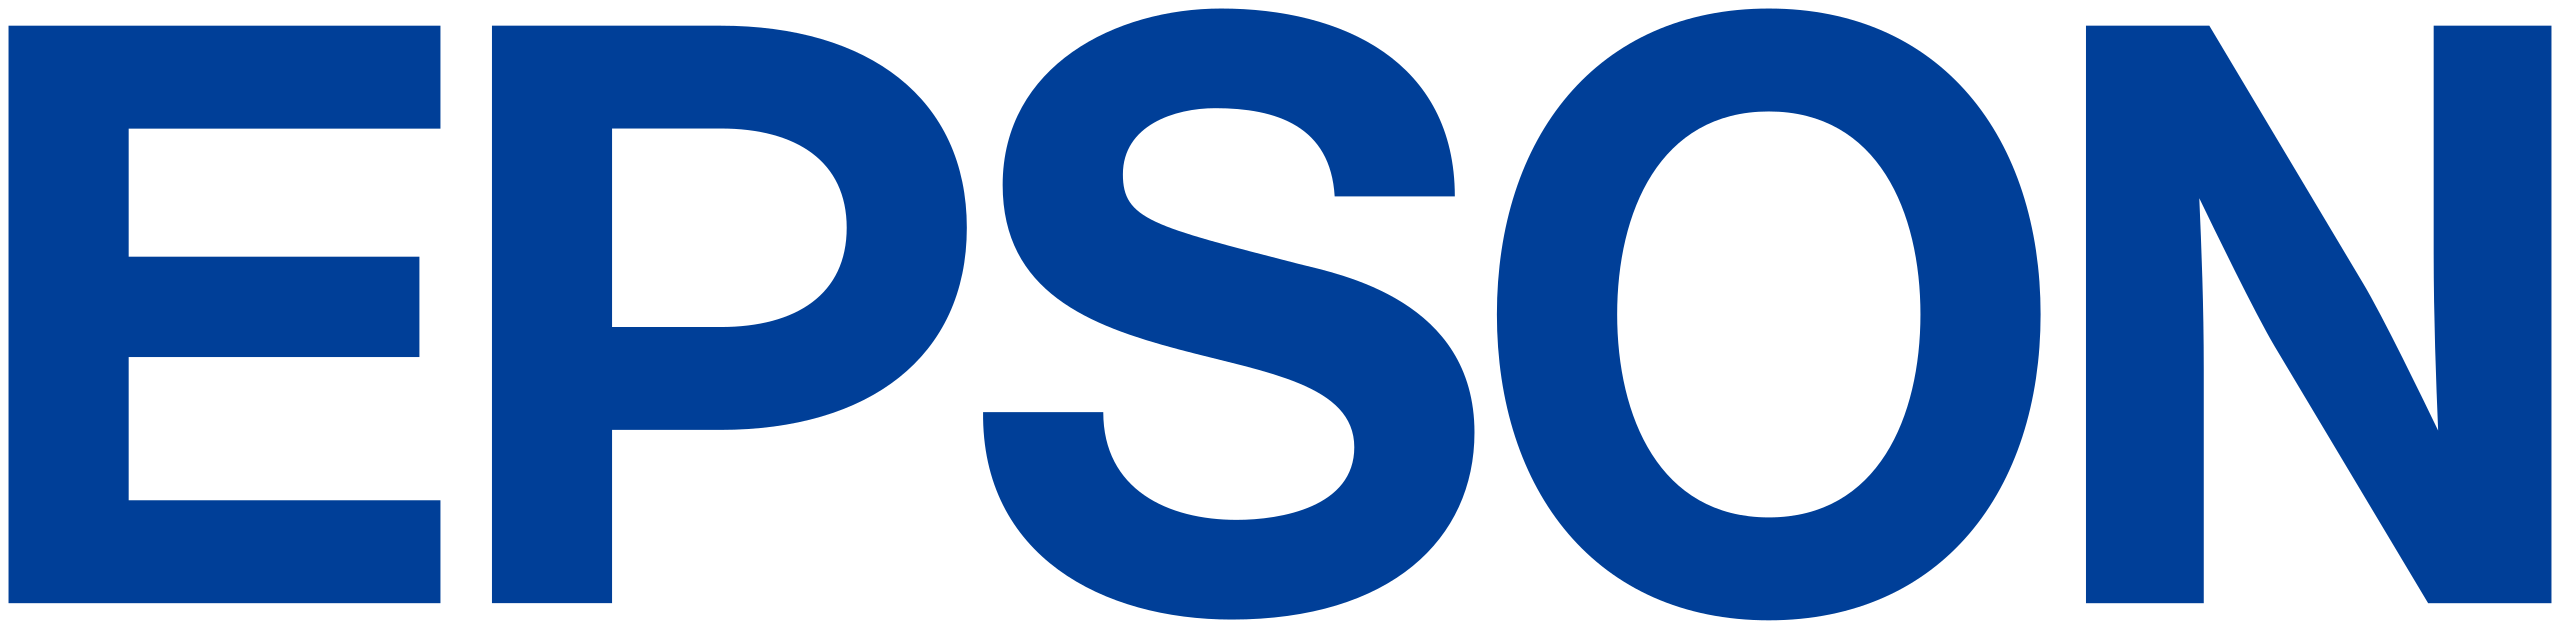 2560px Epson logo.svg - BEYOND POS